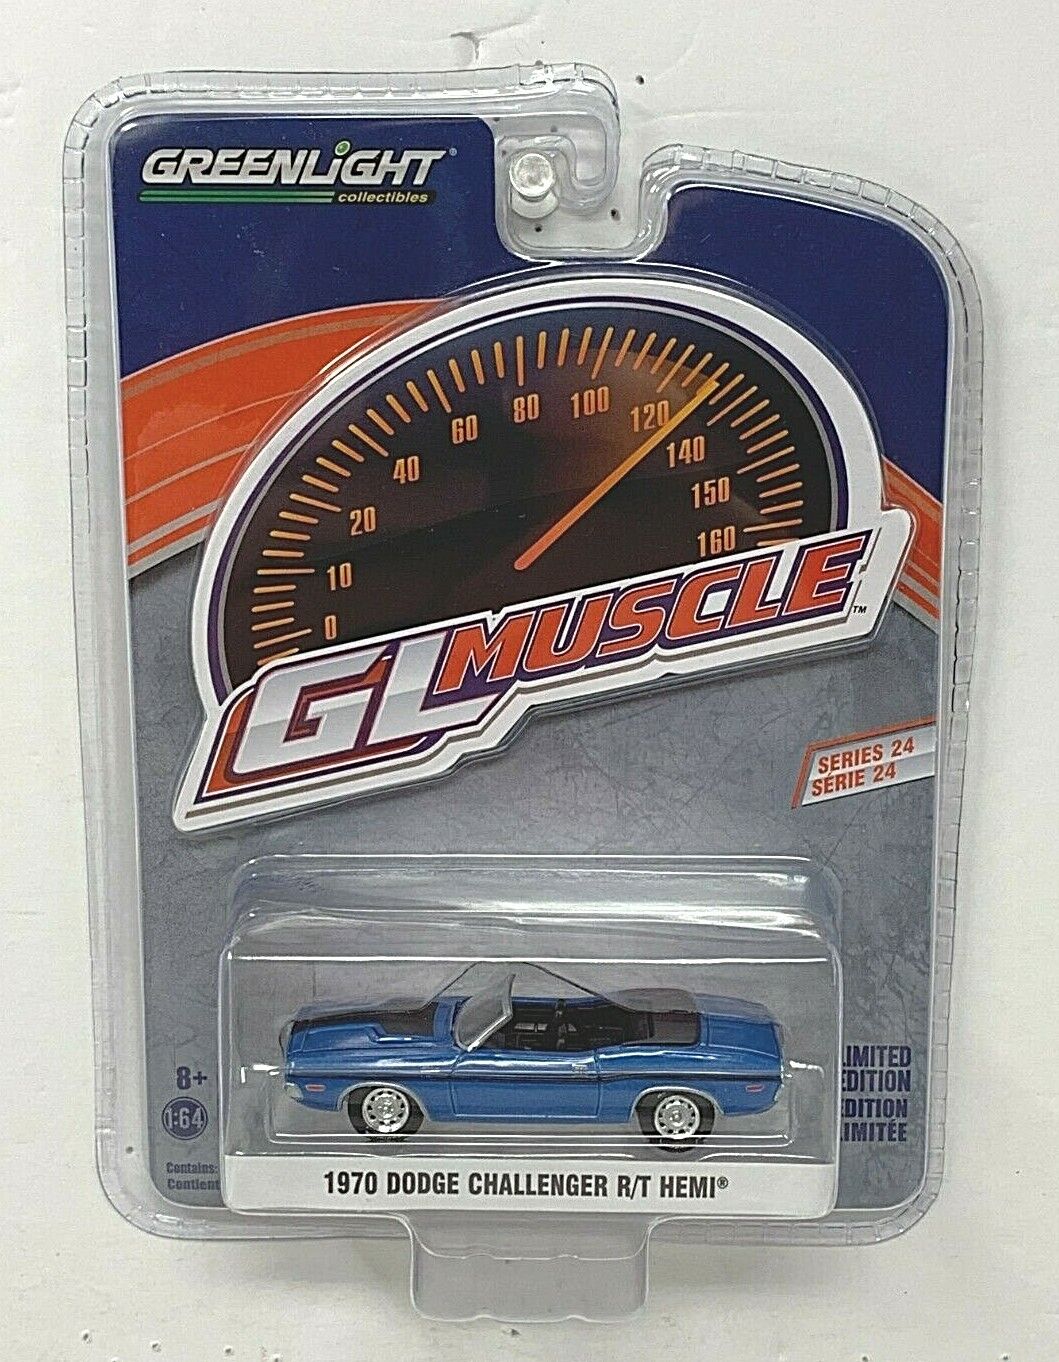 Greenlight GL Muscle Series 24 1970 Dodge Challenger RT Hemi 1:64 Diecast